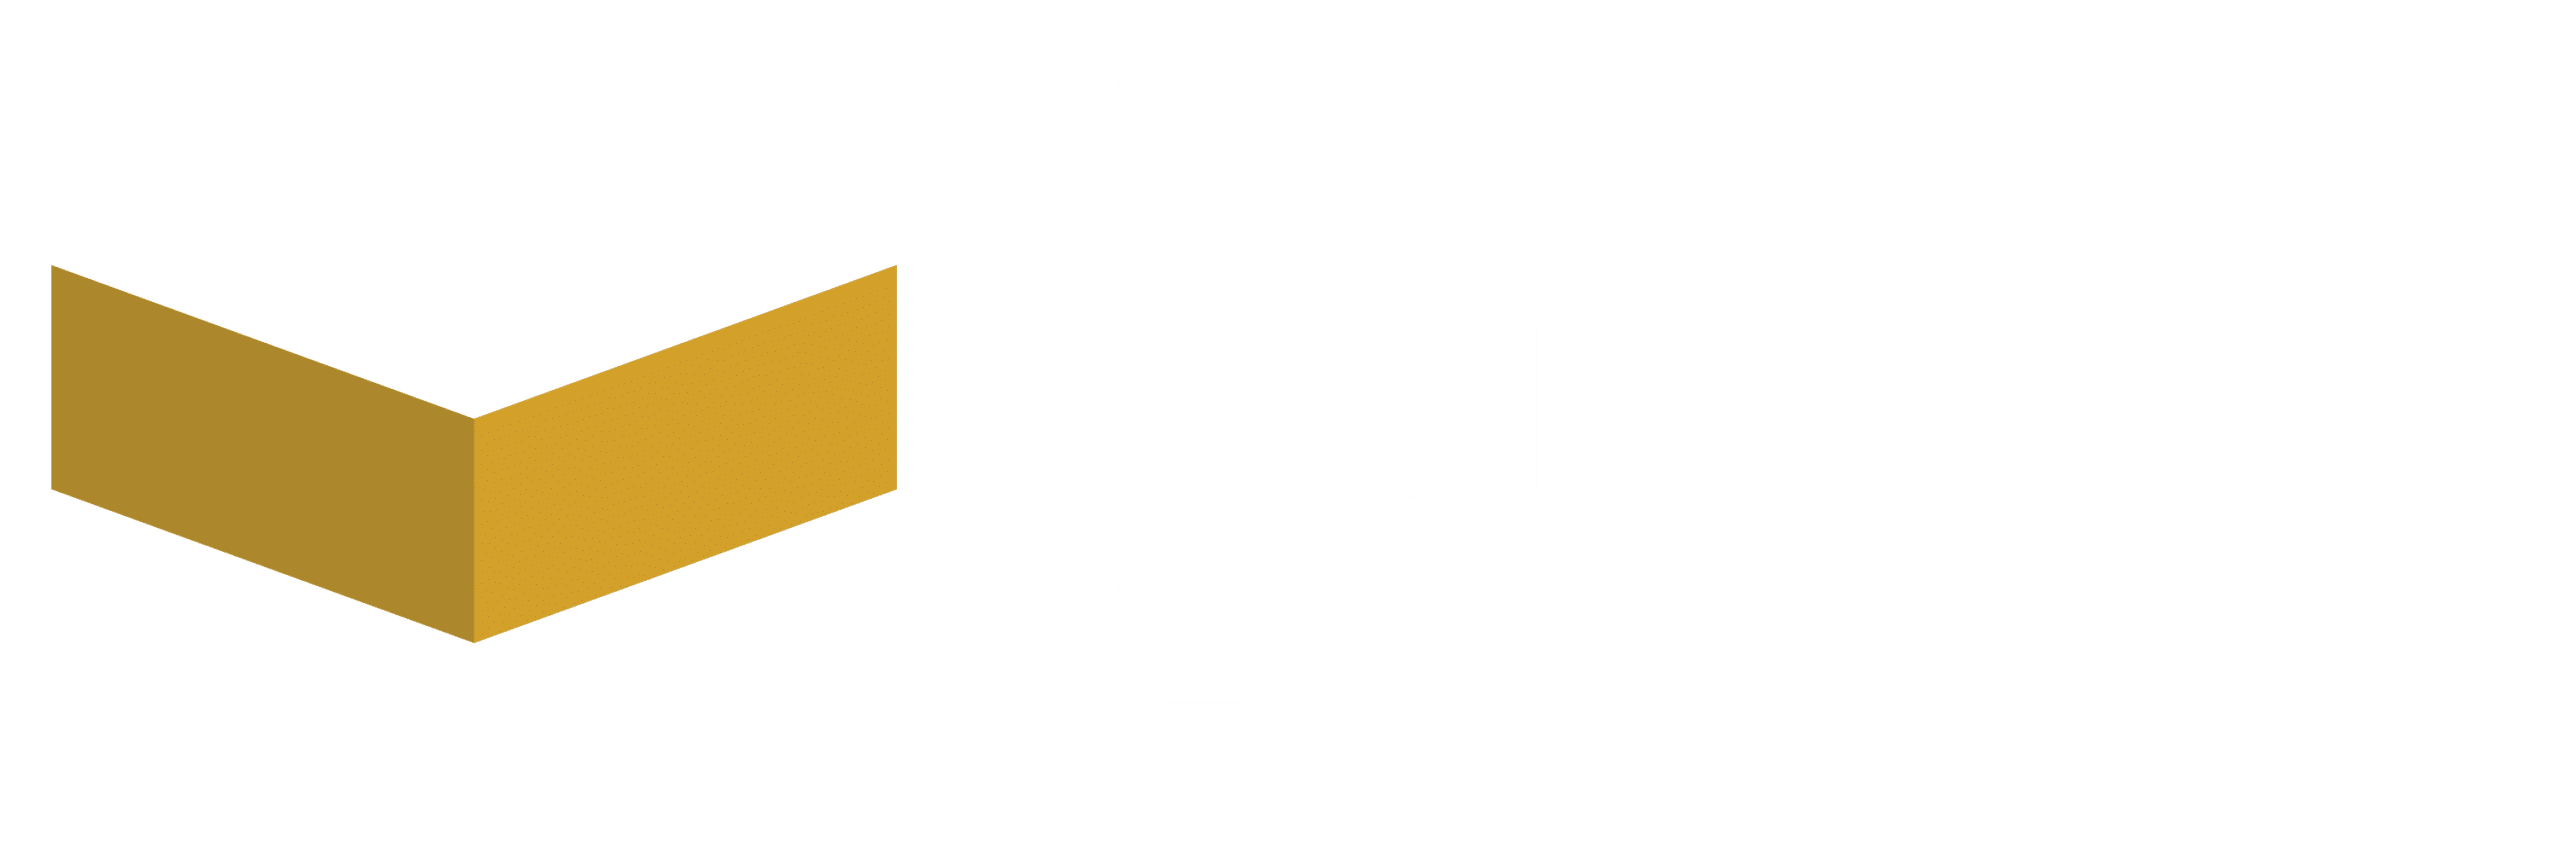 Matt Huffman Law